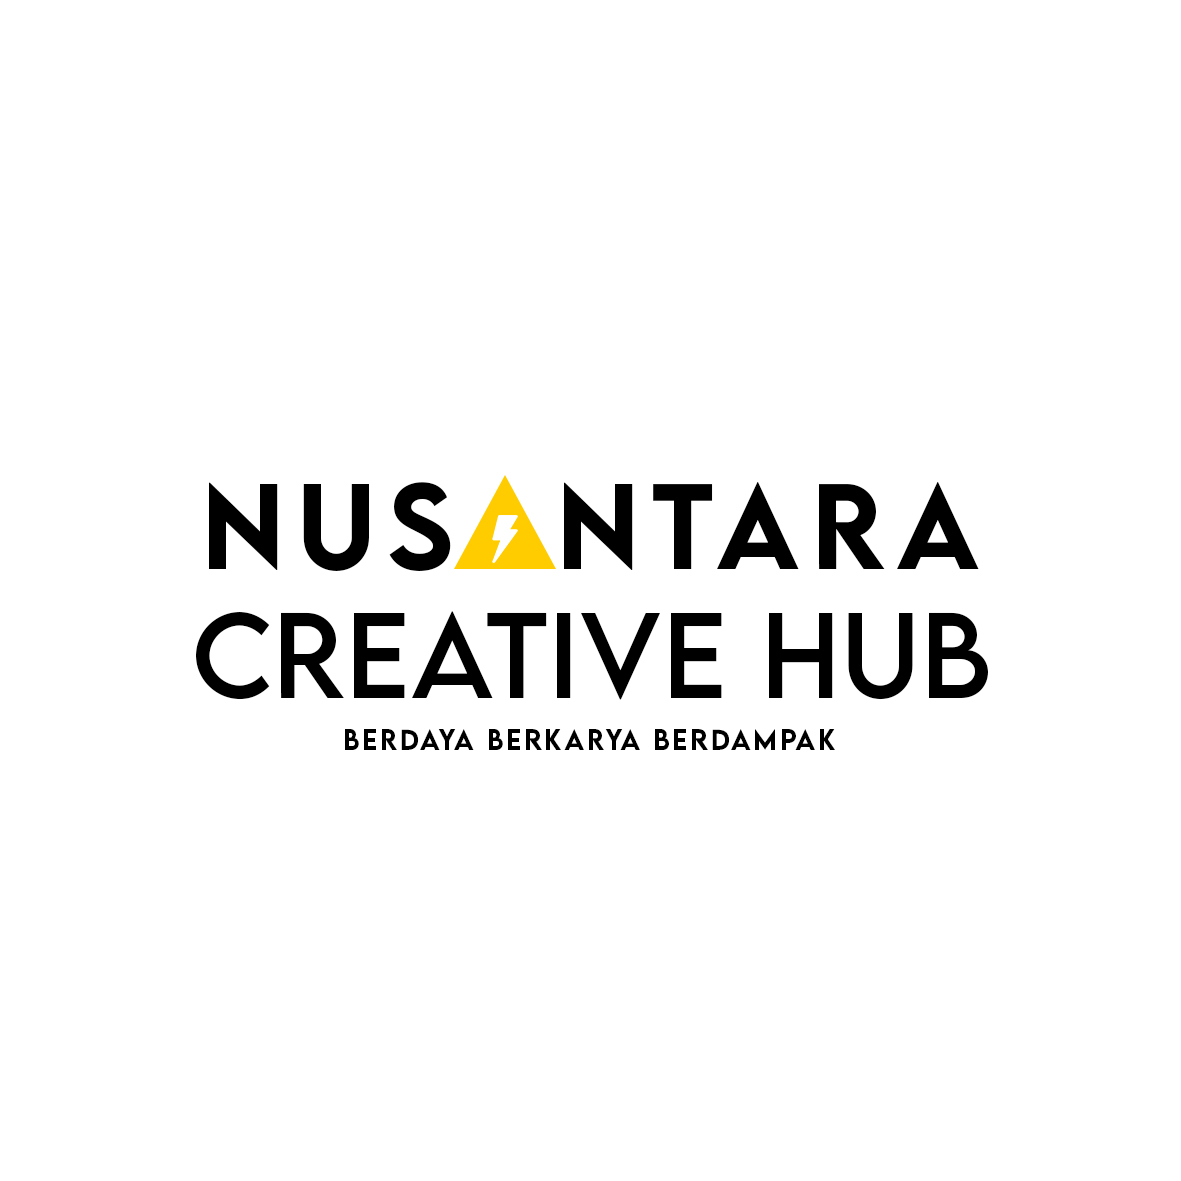 NUSANTARA CREATIVE HUB